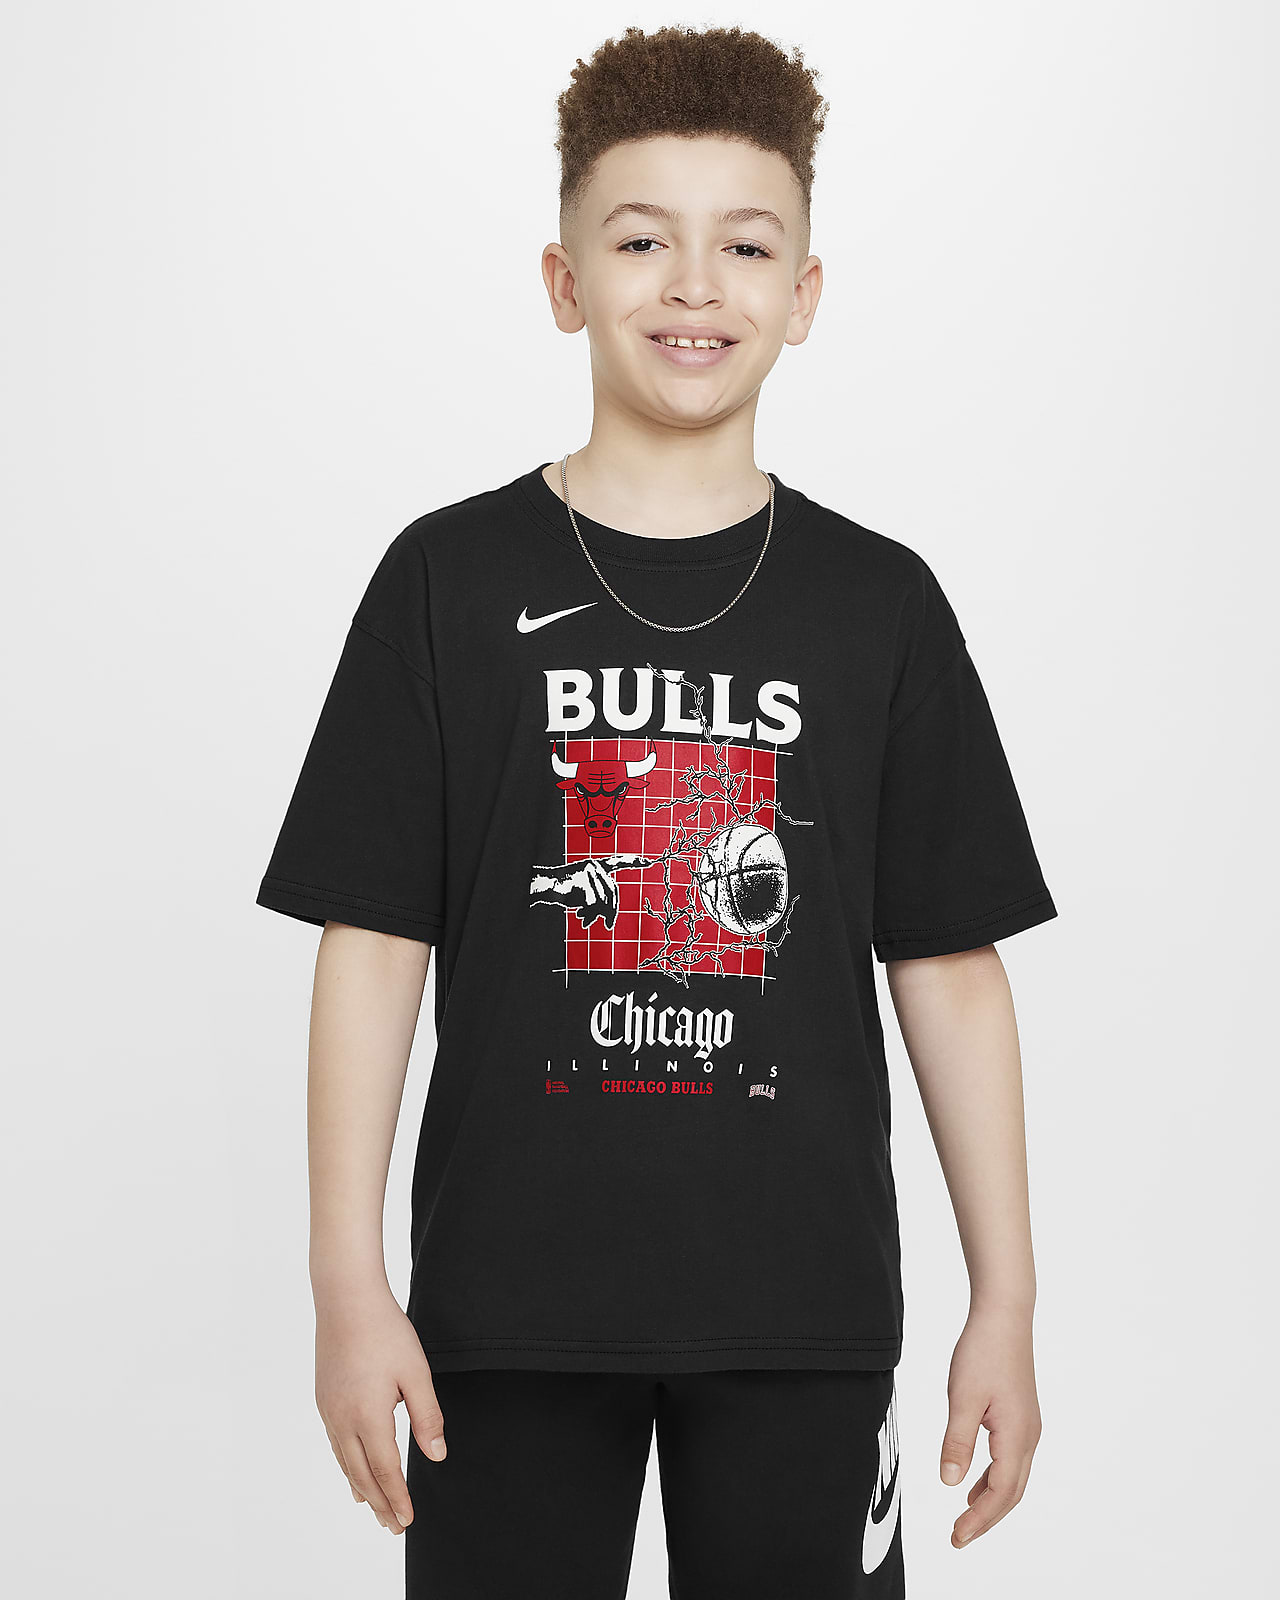 Chicago Bulls Courtside Samarreta Nike NBA Max90 - Nen